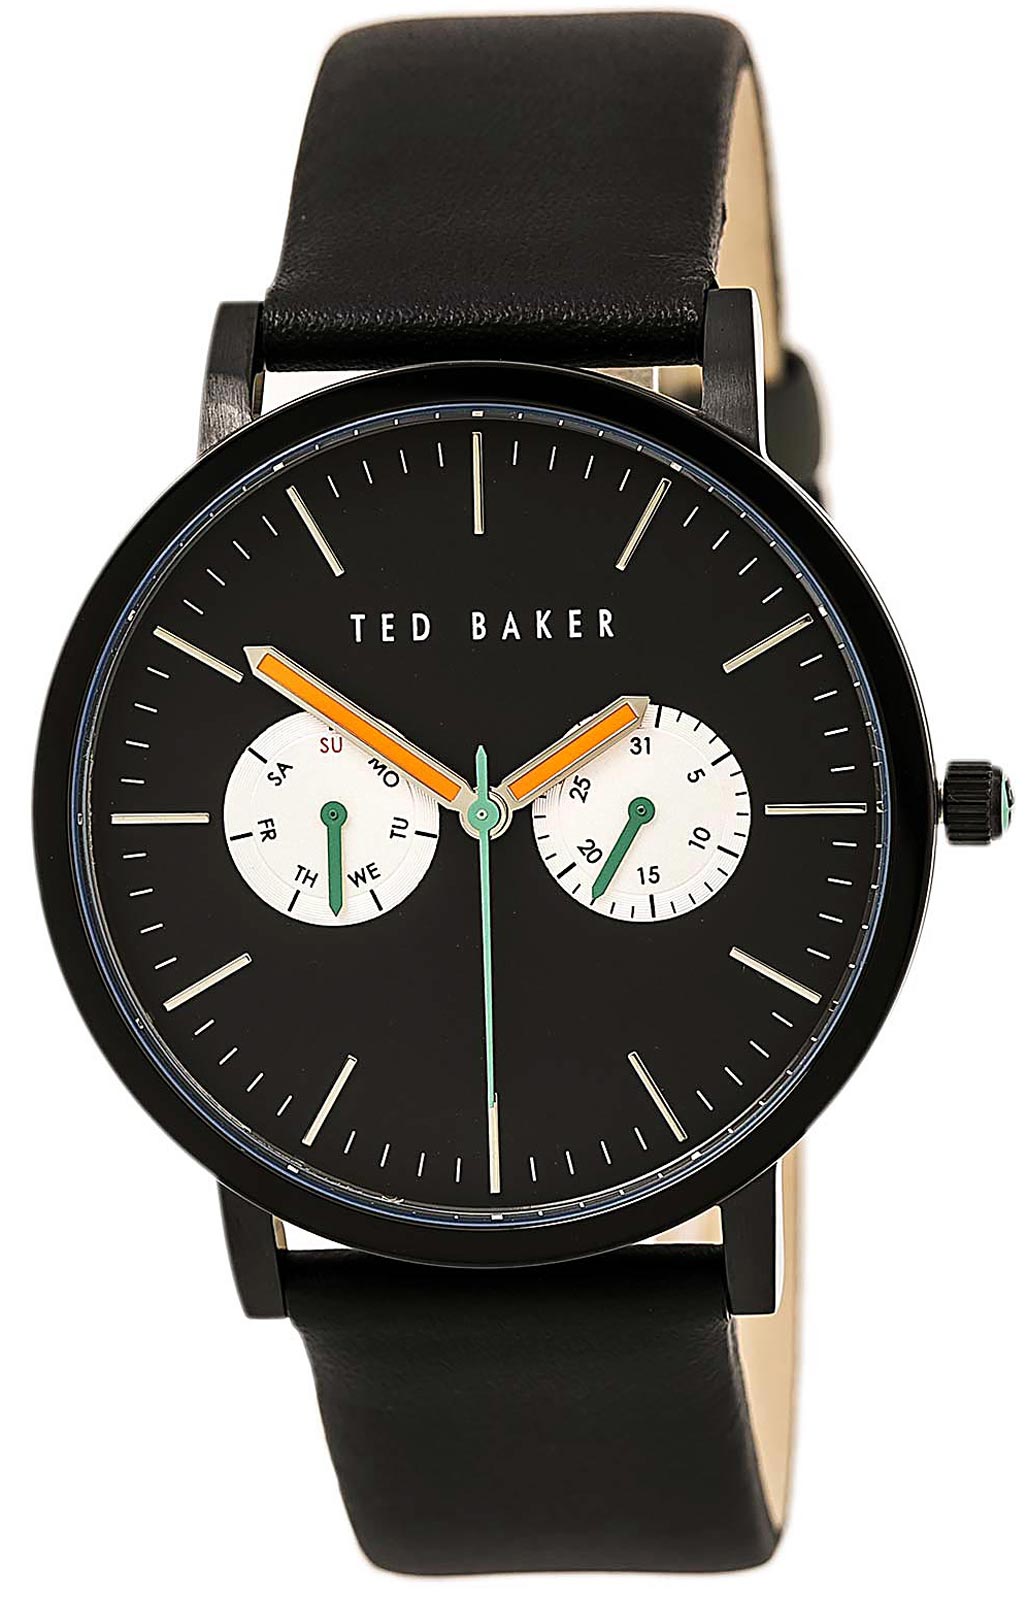 Ted Baker London 10009301 Men's Analog Multifunction Watch